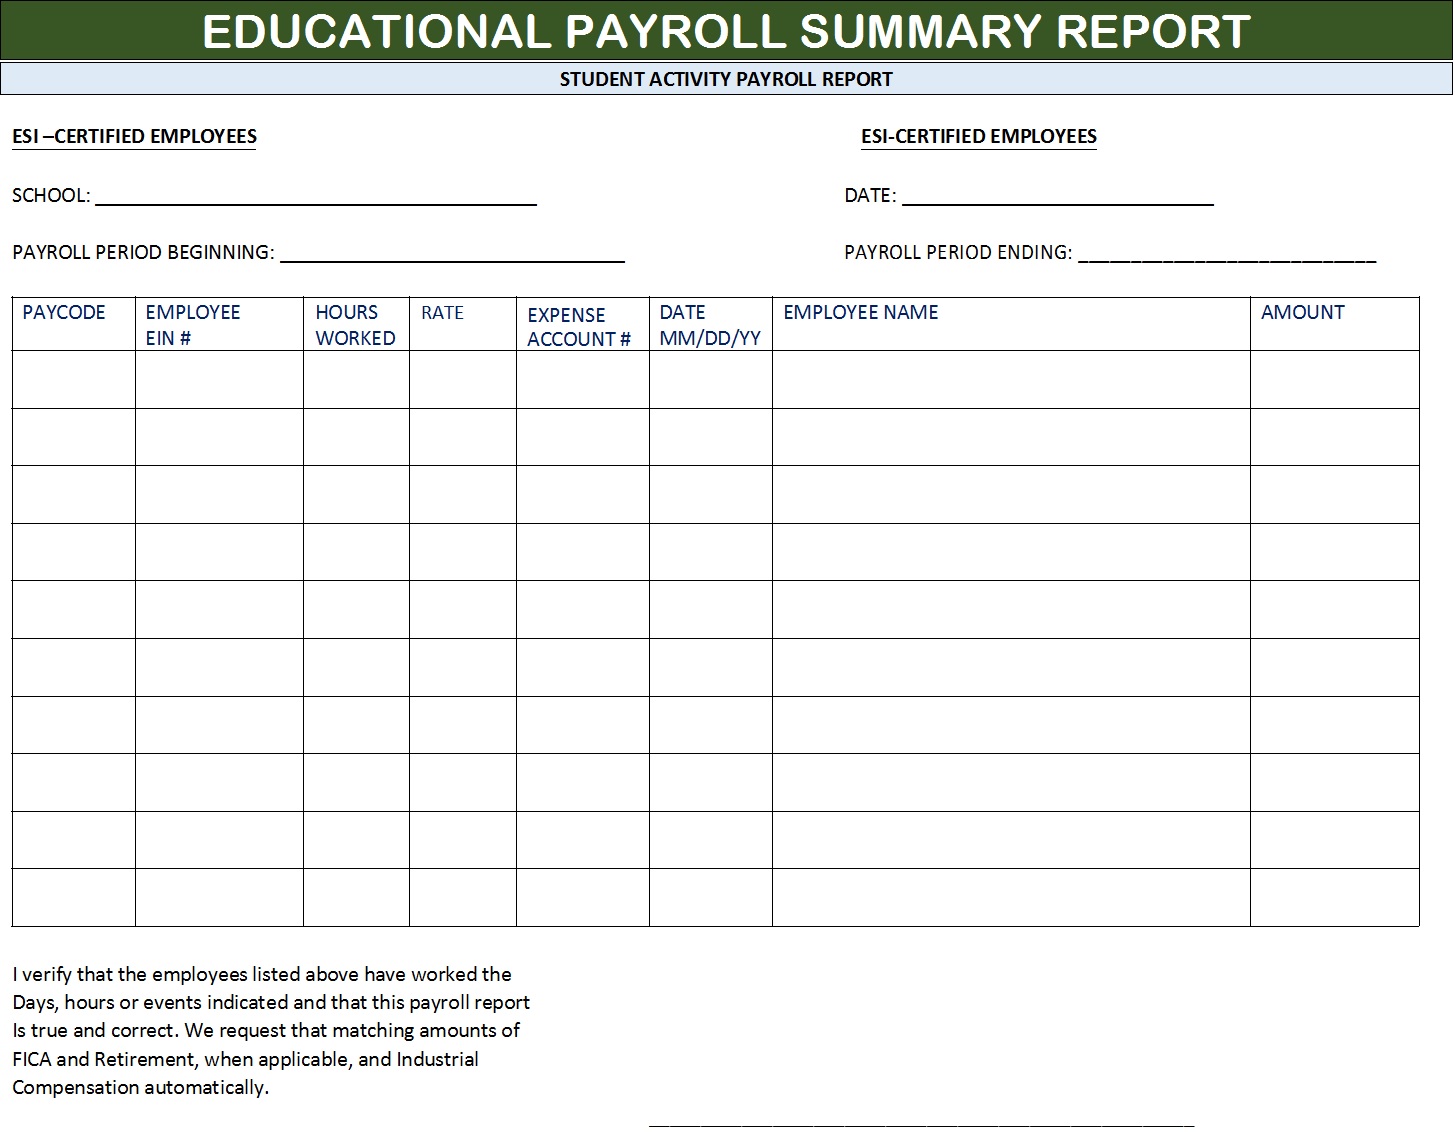 Educational Payroll Report Templates